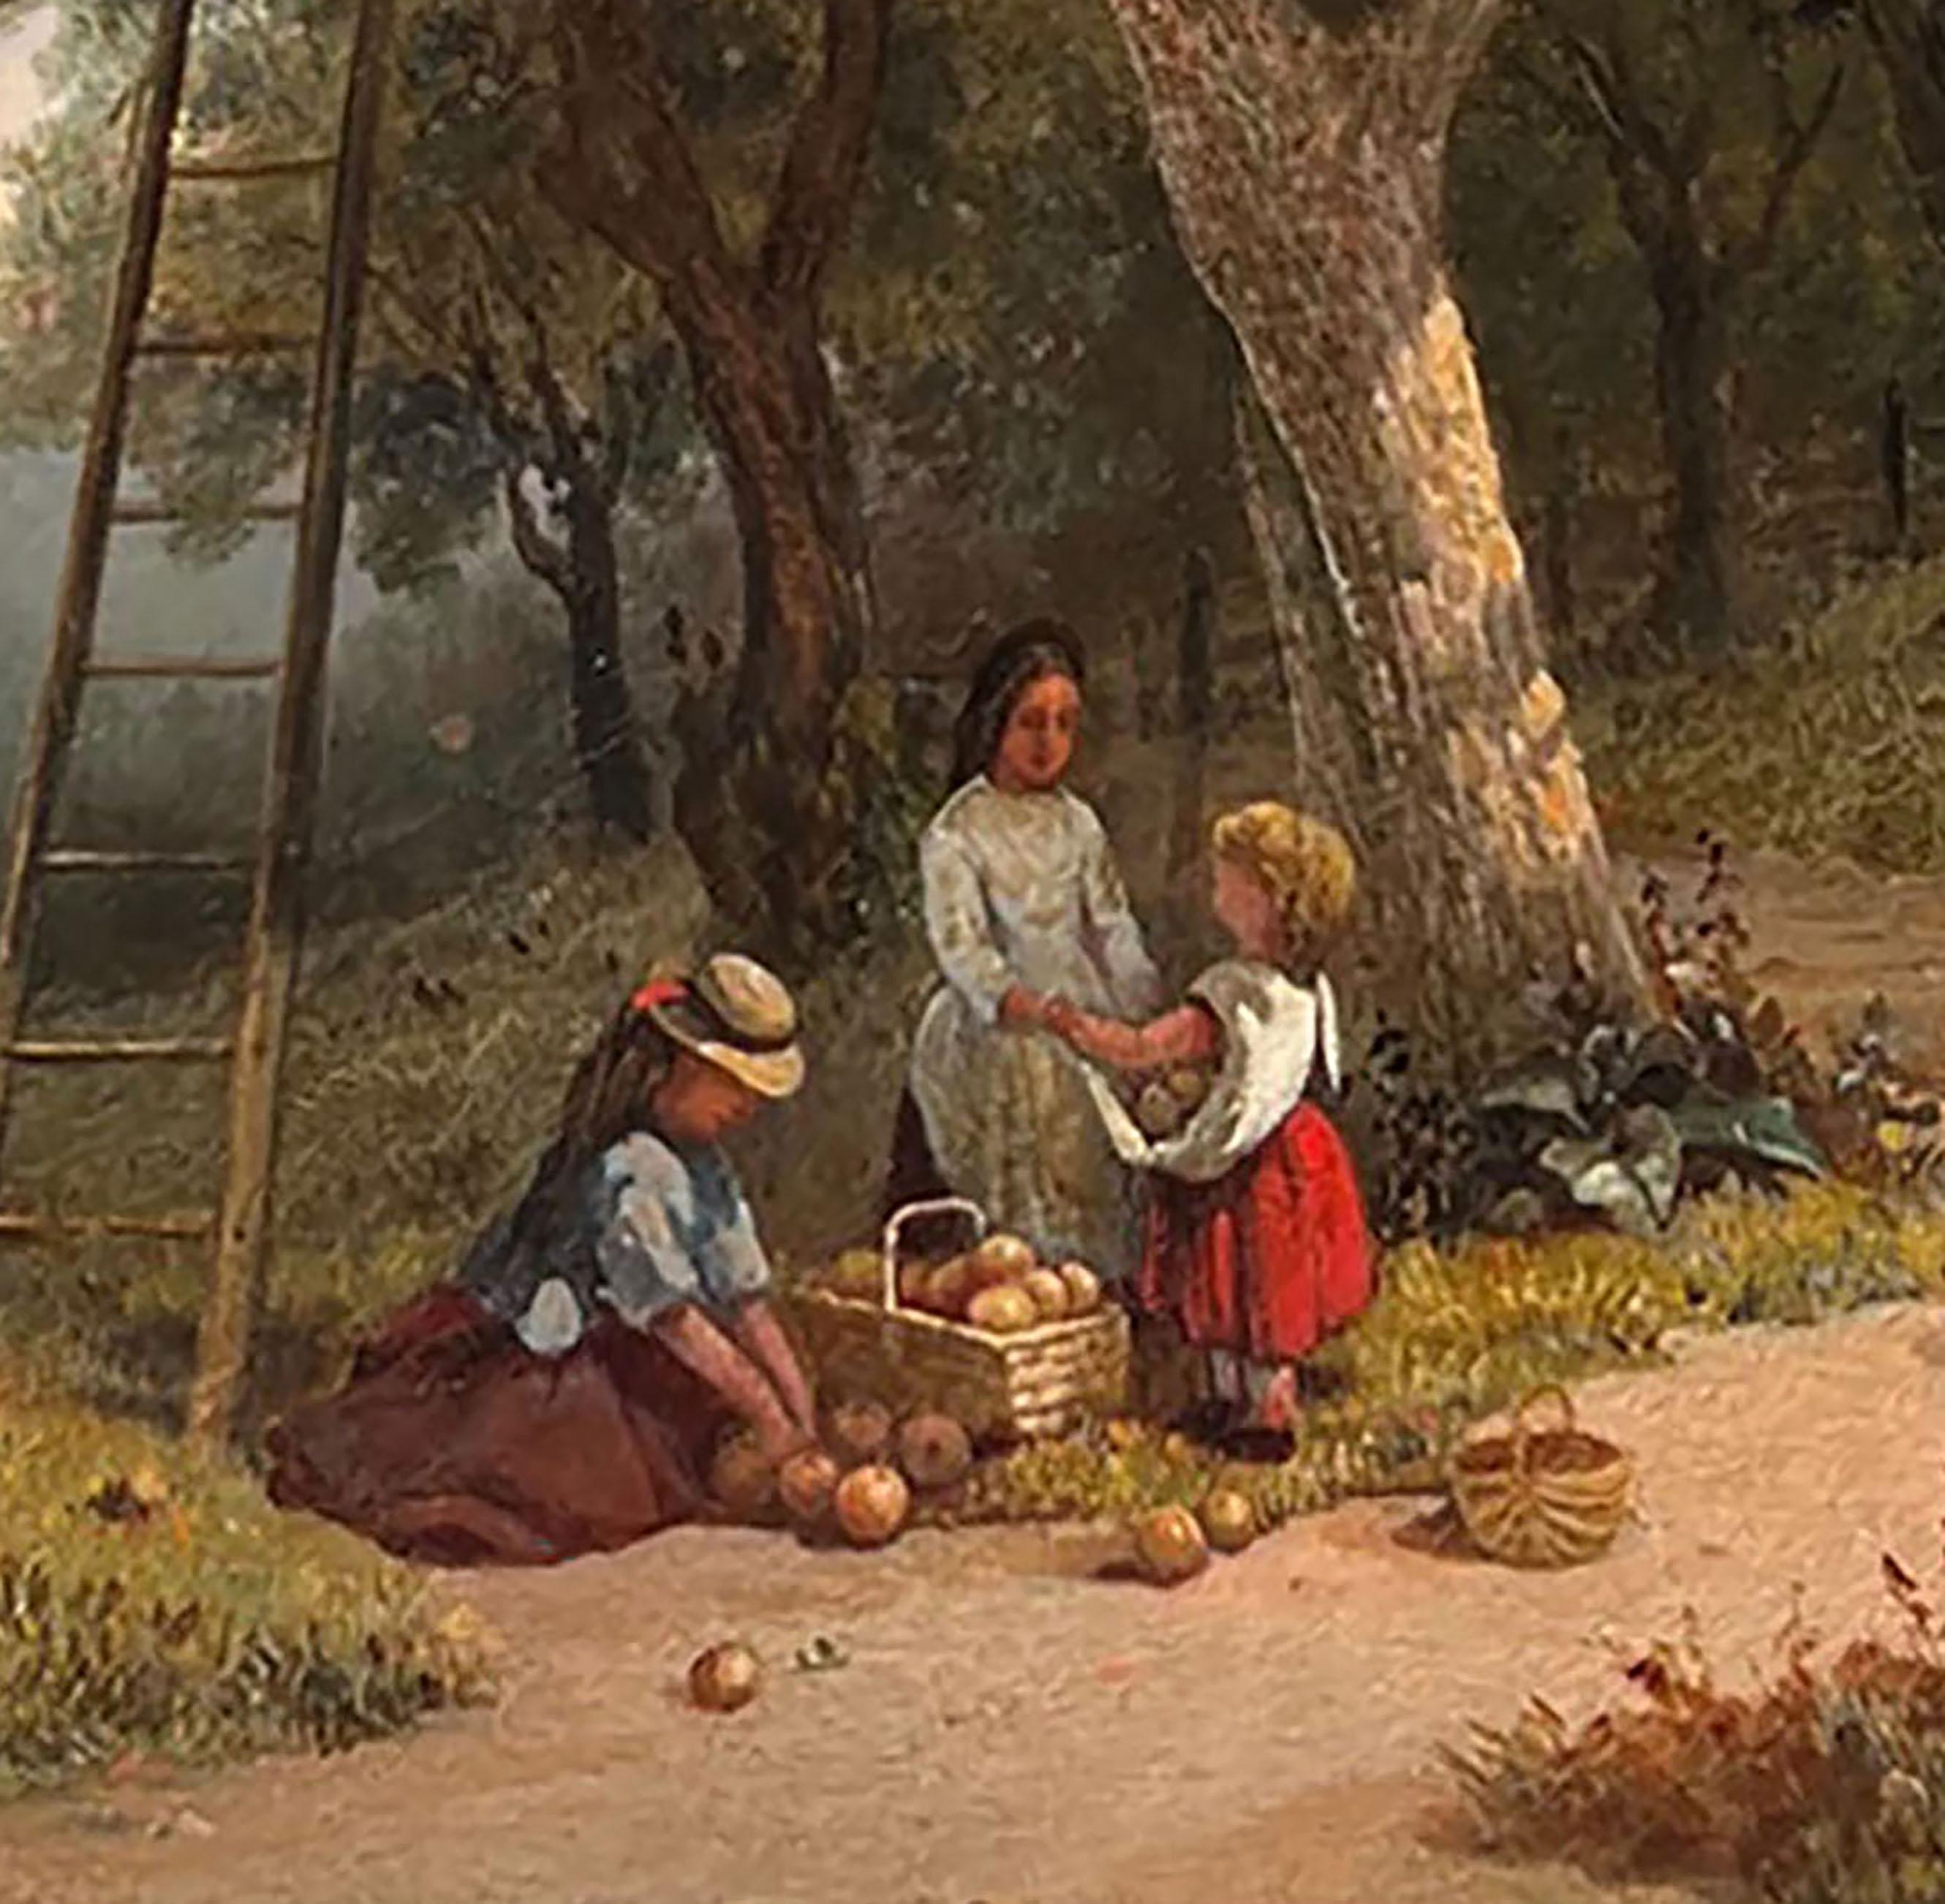 La peinture de genre américaine de l'artiste Lemuel Maynard Wiles (1826-1905), 